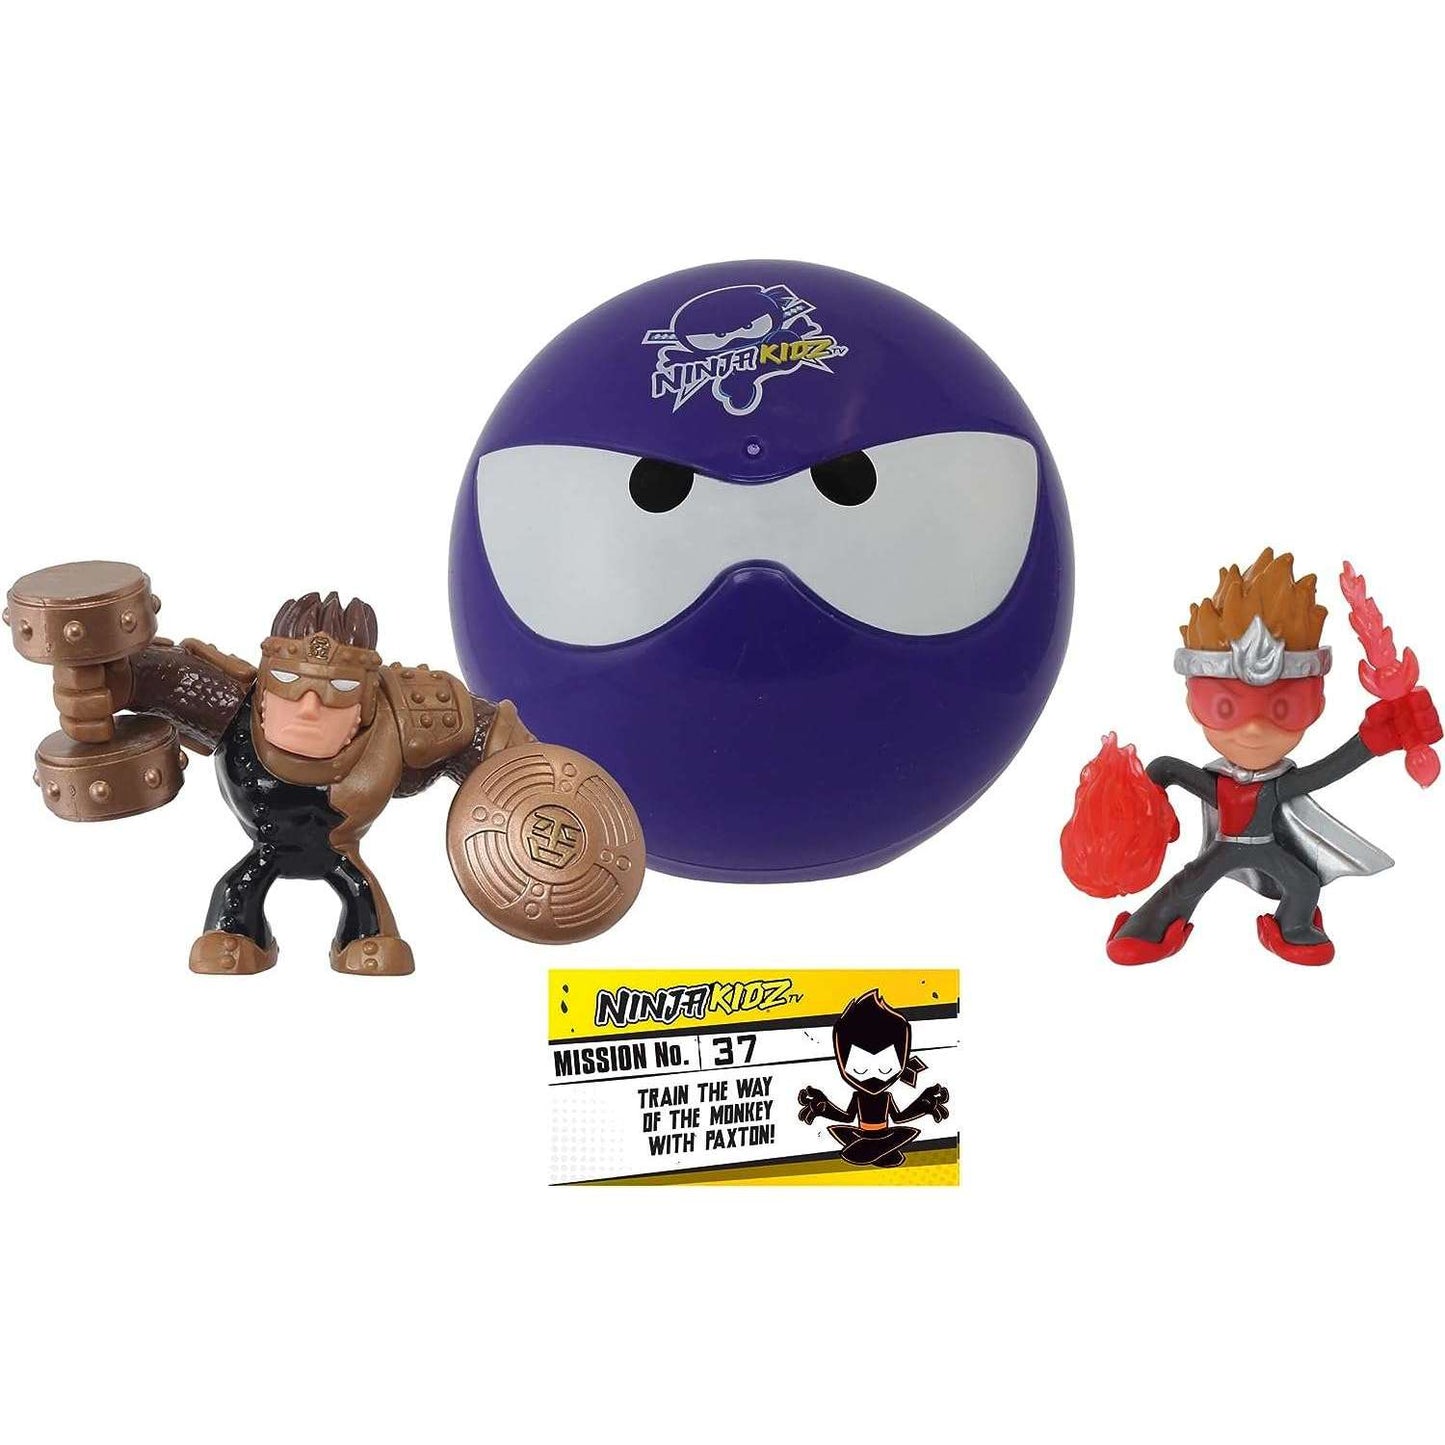 Toys N Tuck:Ninja Kidz Mystery Mini Ninja Ball Series 3,Ninja Kidz